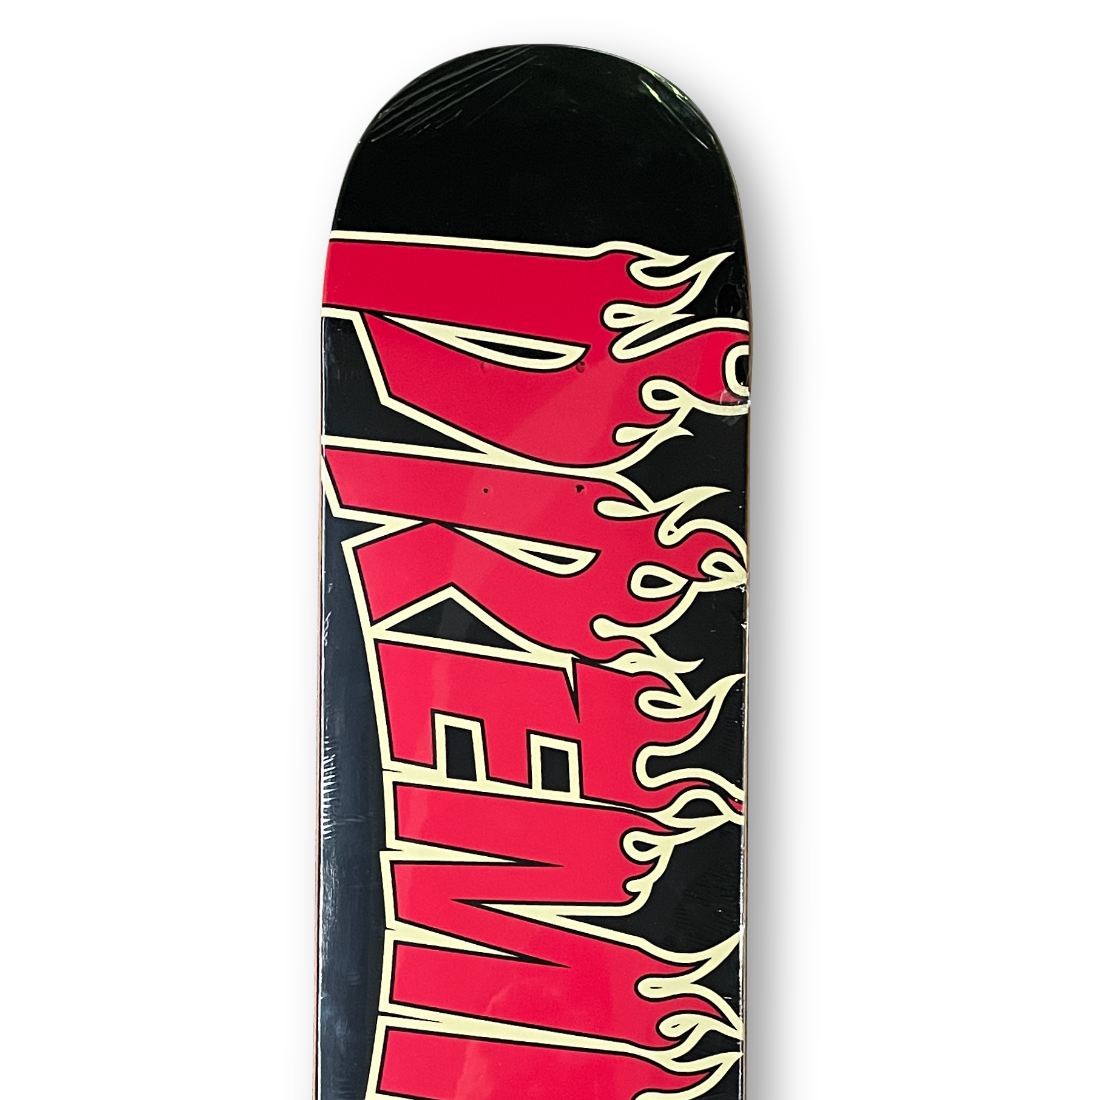 (子供用)【7.5】Premium Skateboards - Burn "Black"